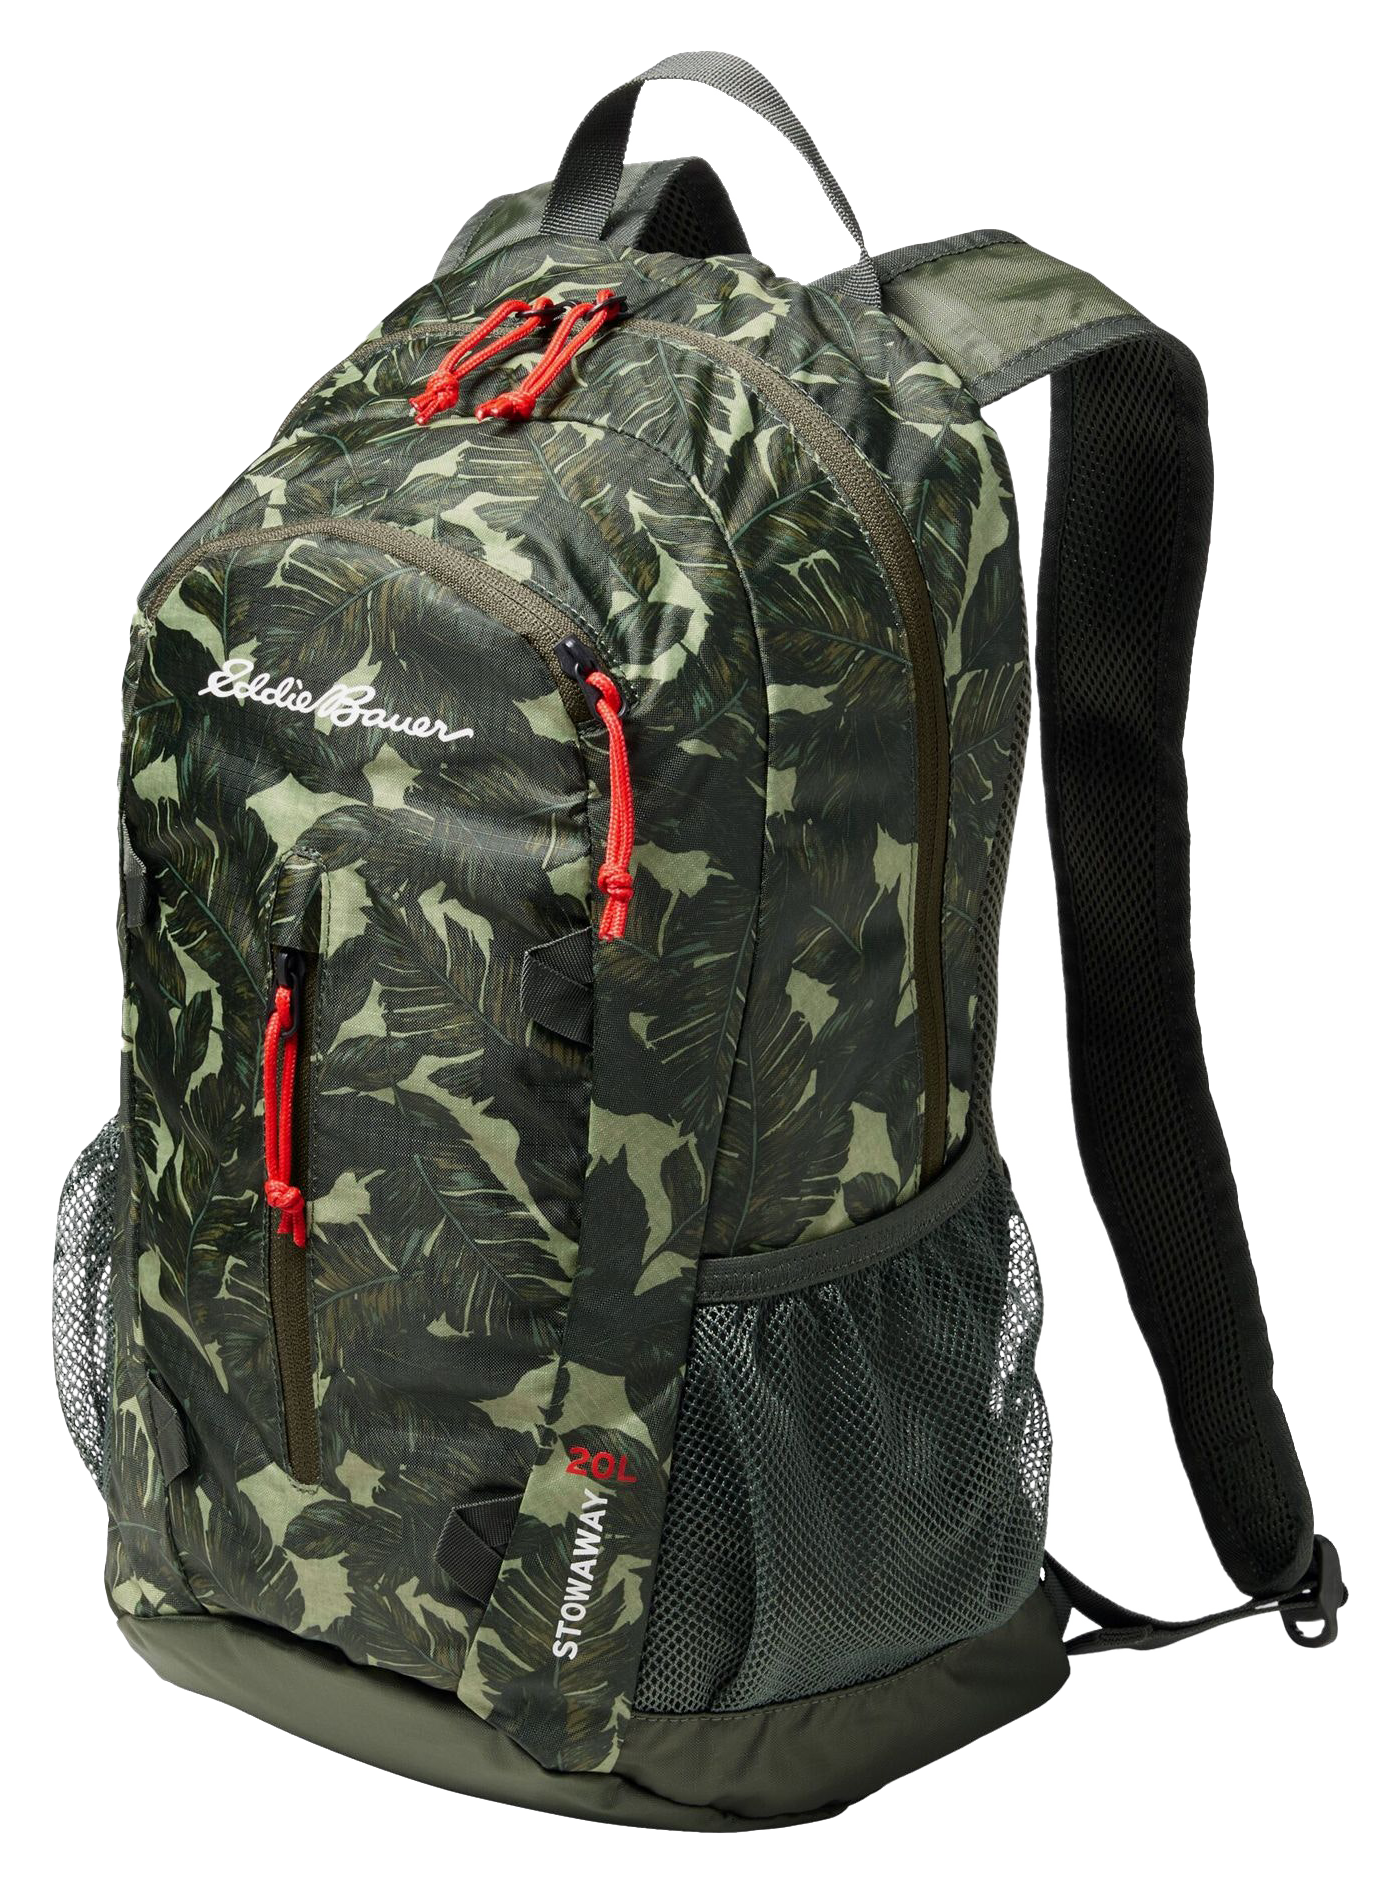 Eddie Bauer Stowaway Packable 20L Backpack - Dark Loden